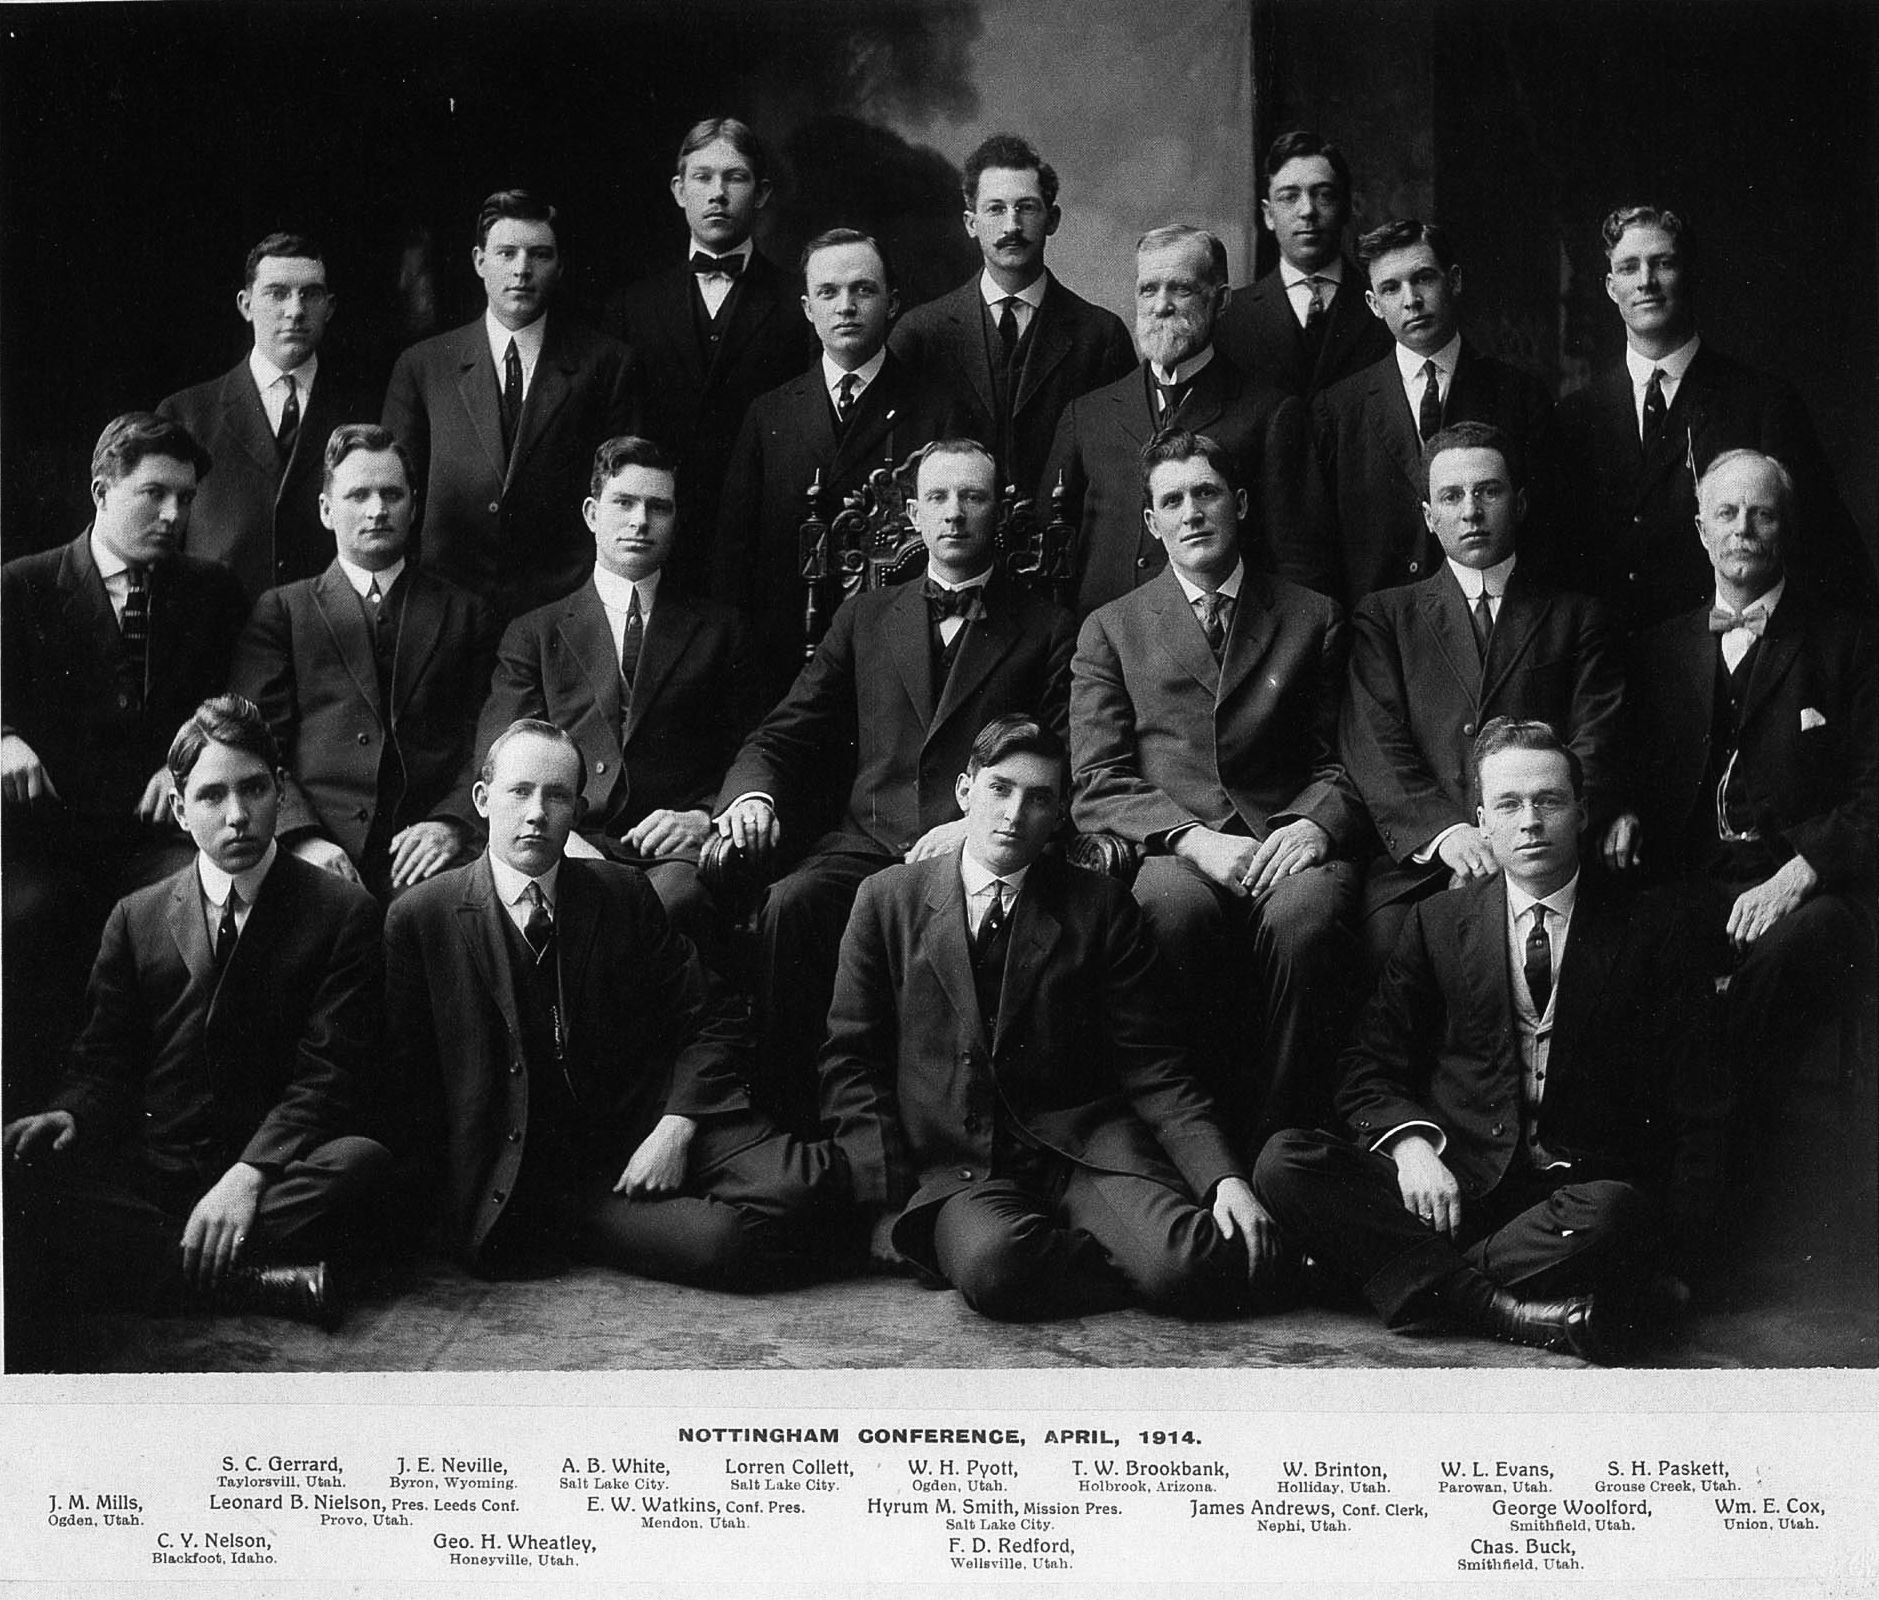 Nottingham Conference, April, 1914